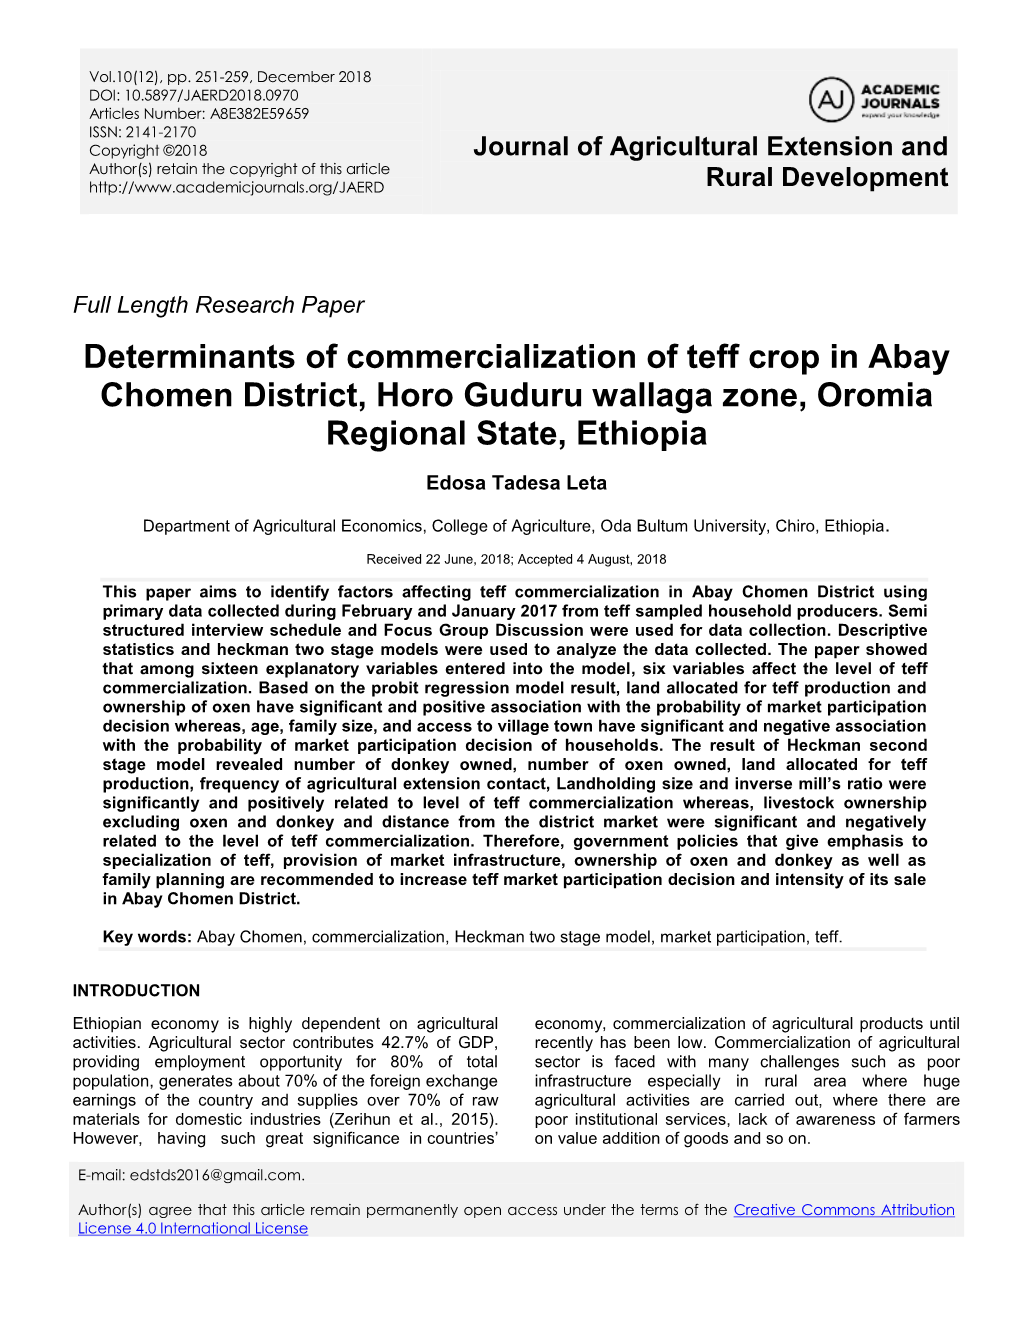 Determinants of Commercialization of Teff Crop in Abay Chomen District, Horo Guduru Wallaga Zone, Oromia Regional State, Ethiopia